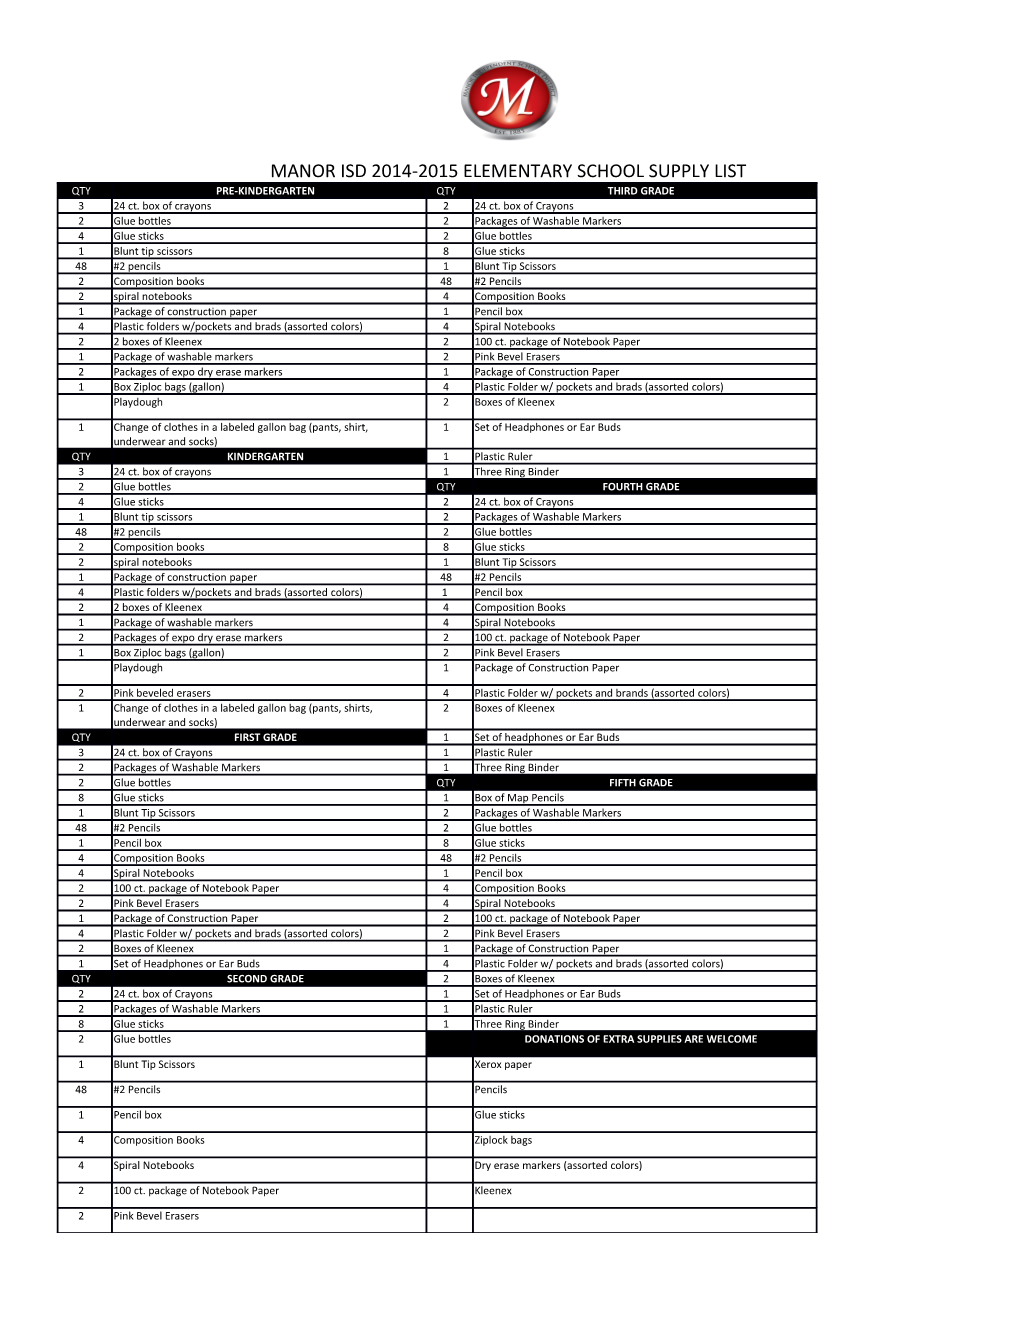 Manor Isd 2014-2015 Elementary School Supply List